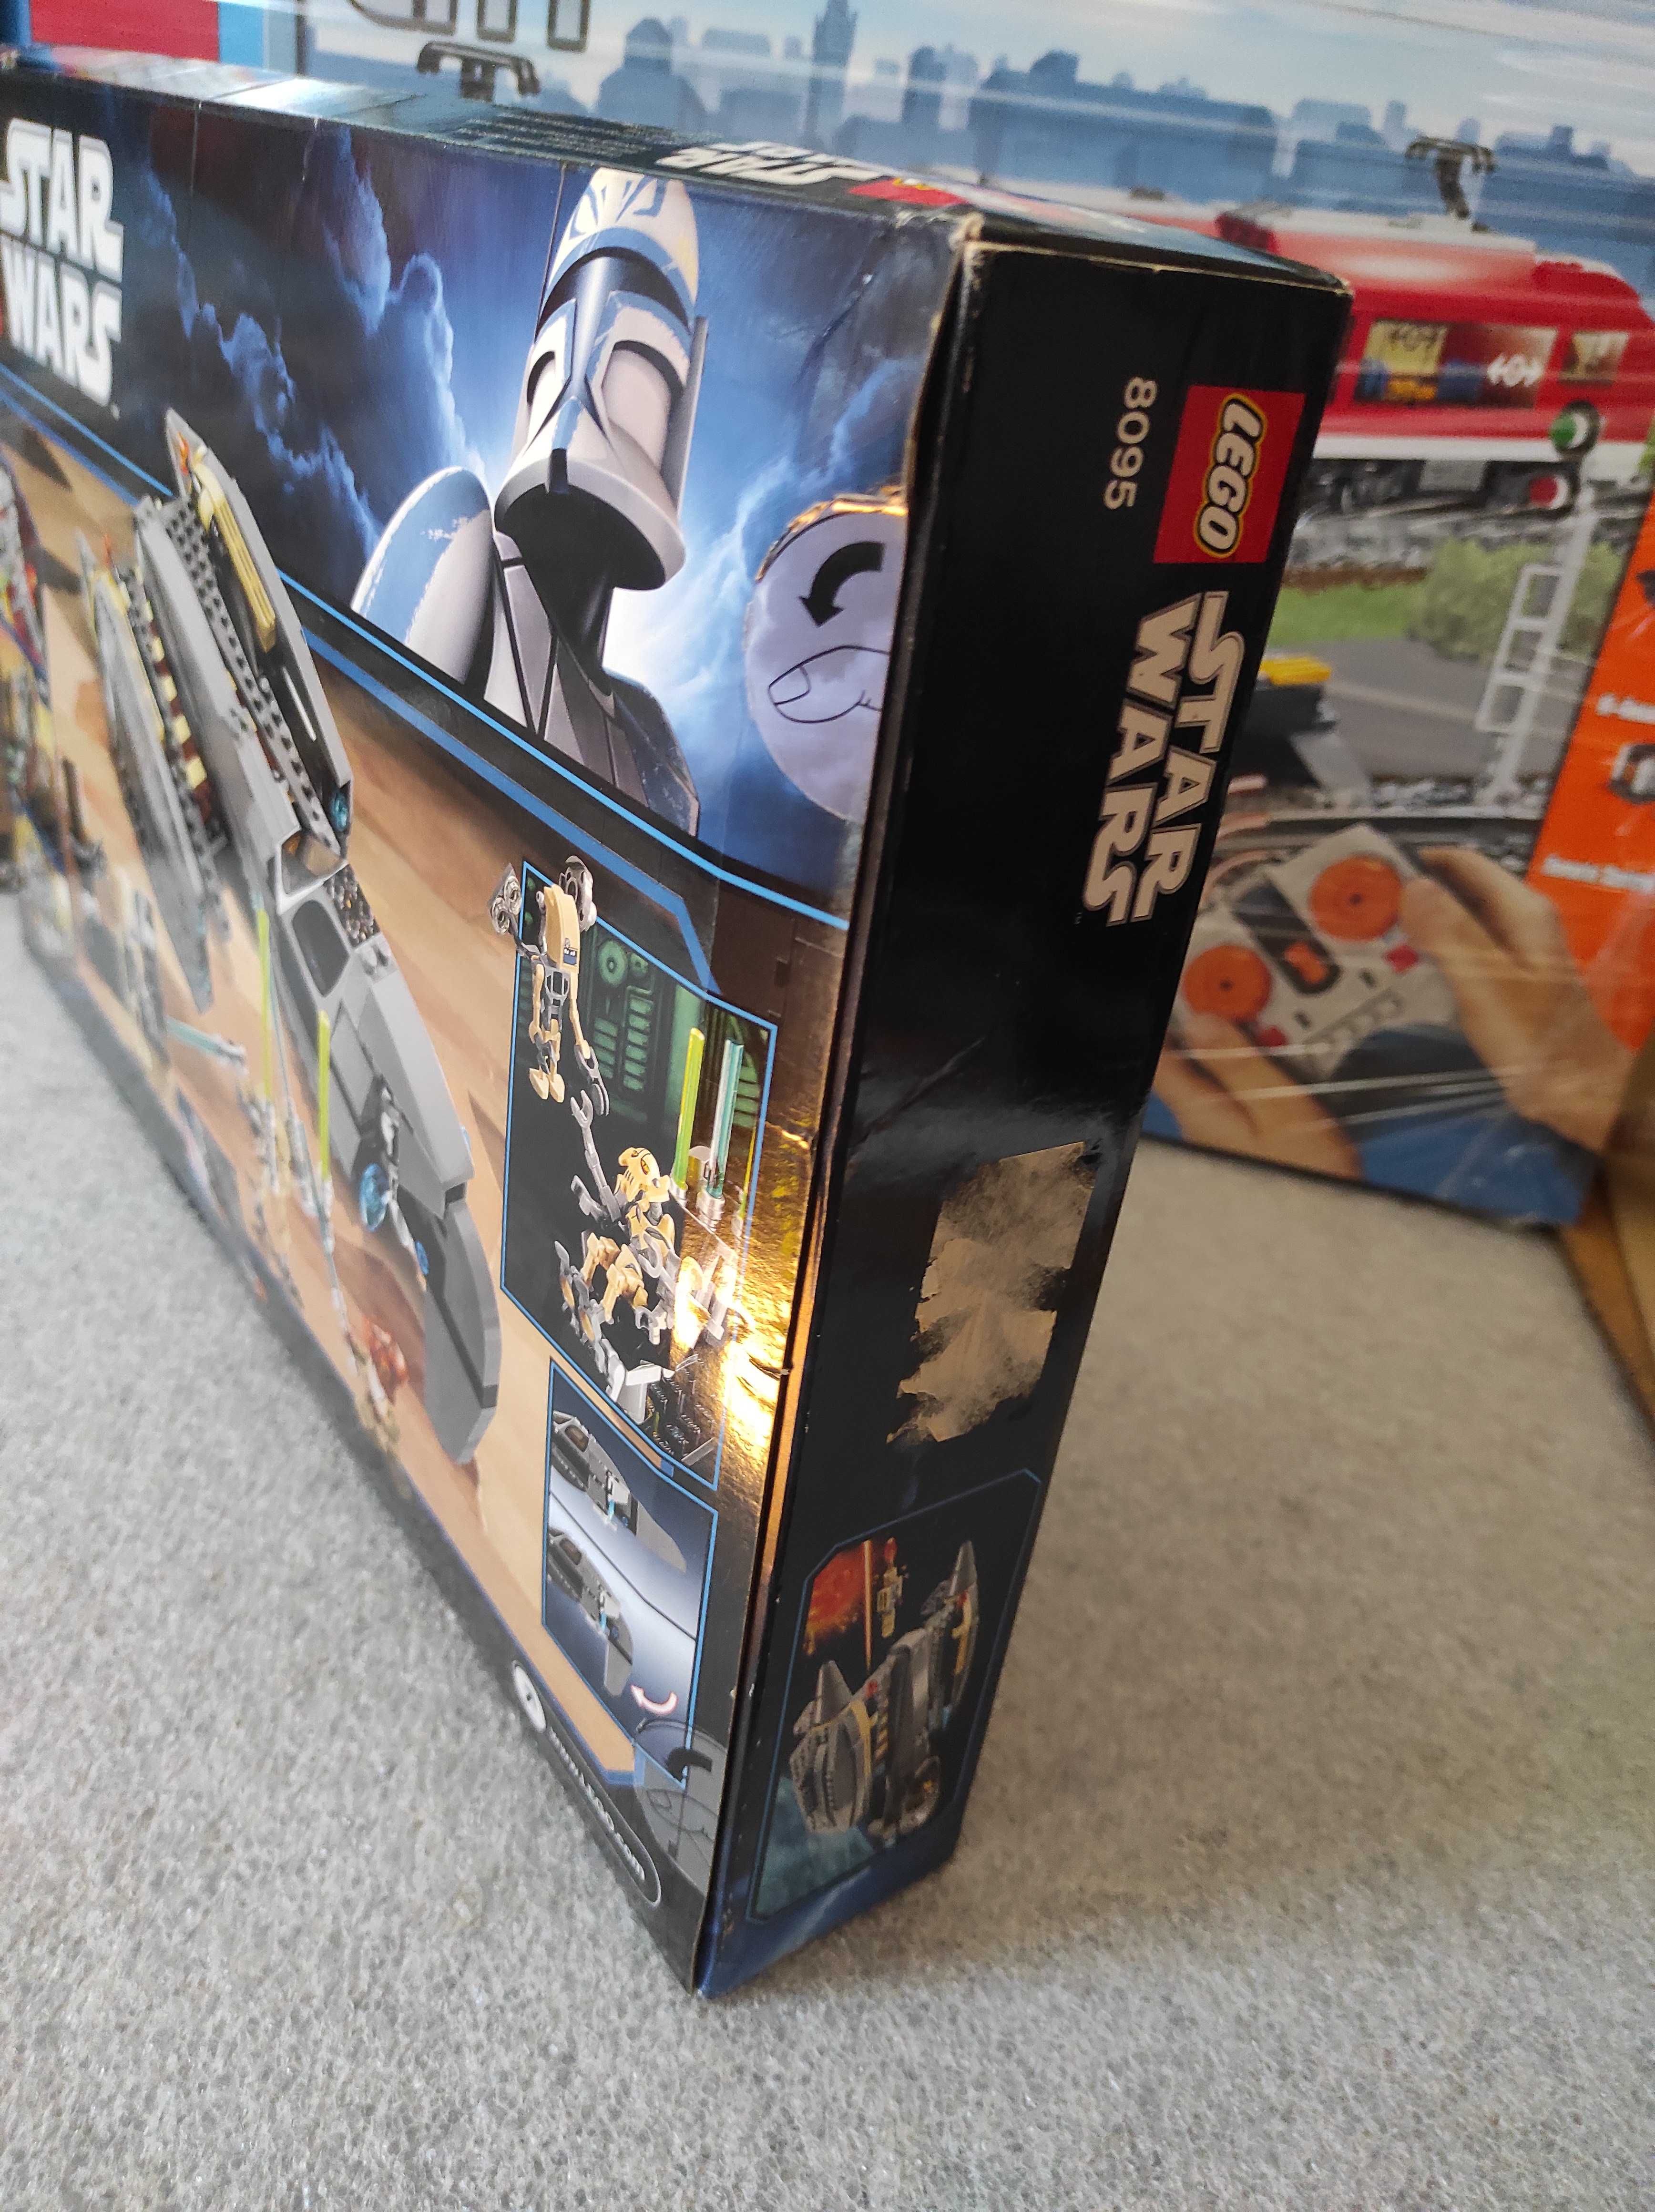 Lego 8095 General Grievous Starfighter Star Wars Novo e Selado